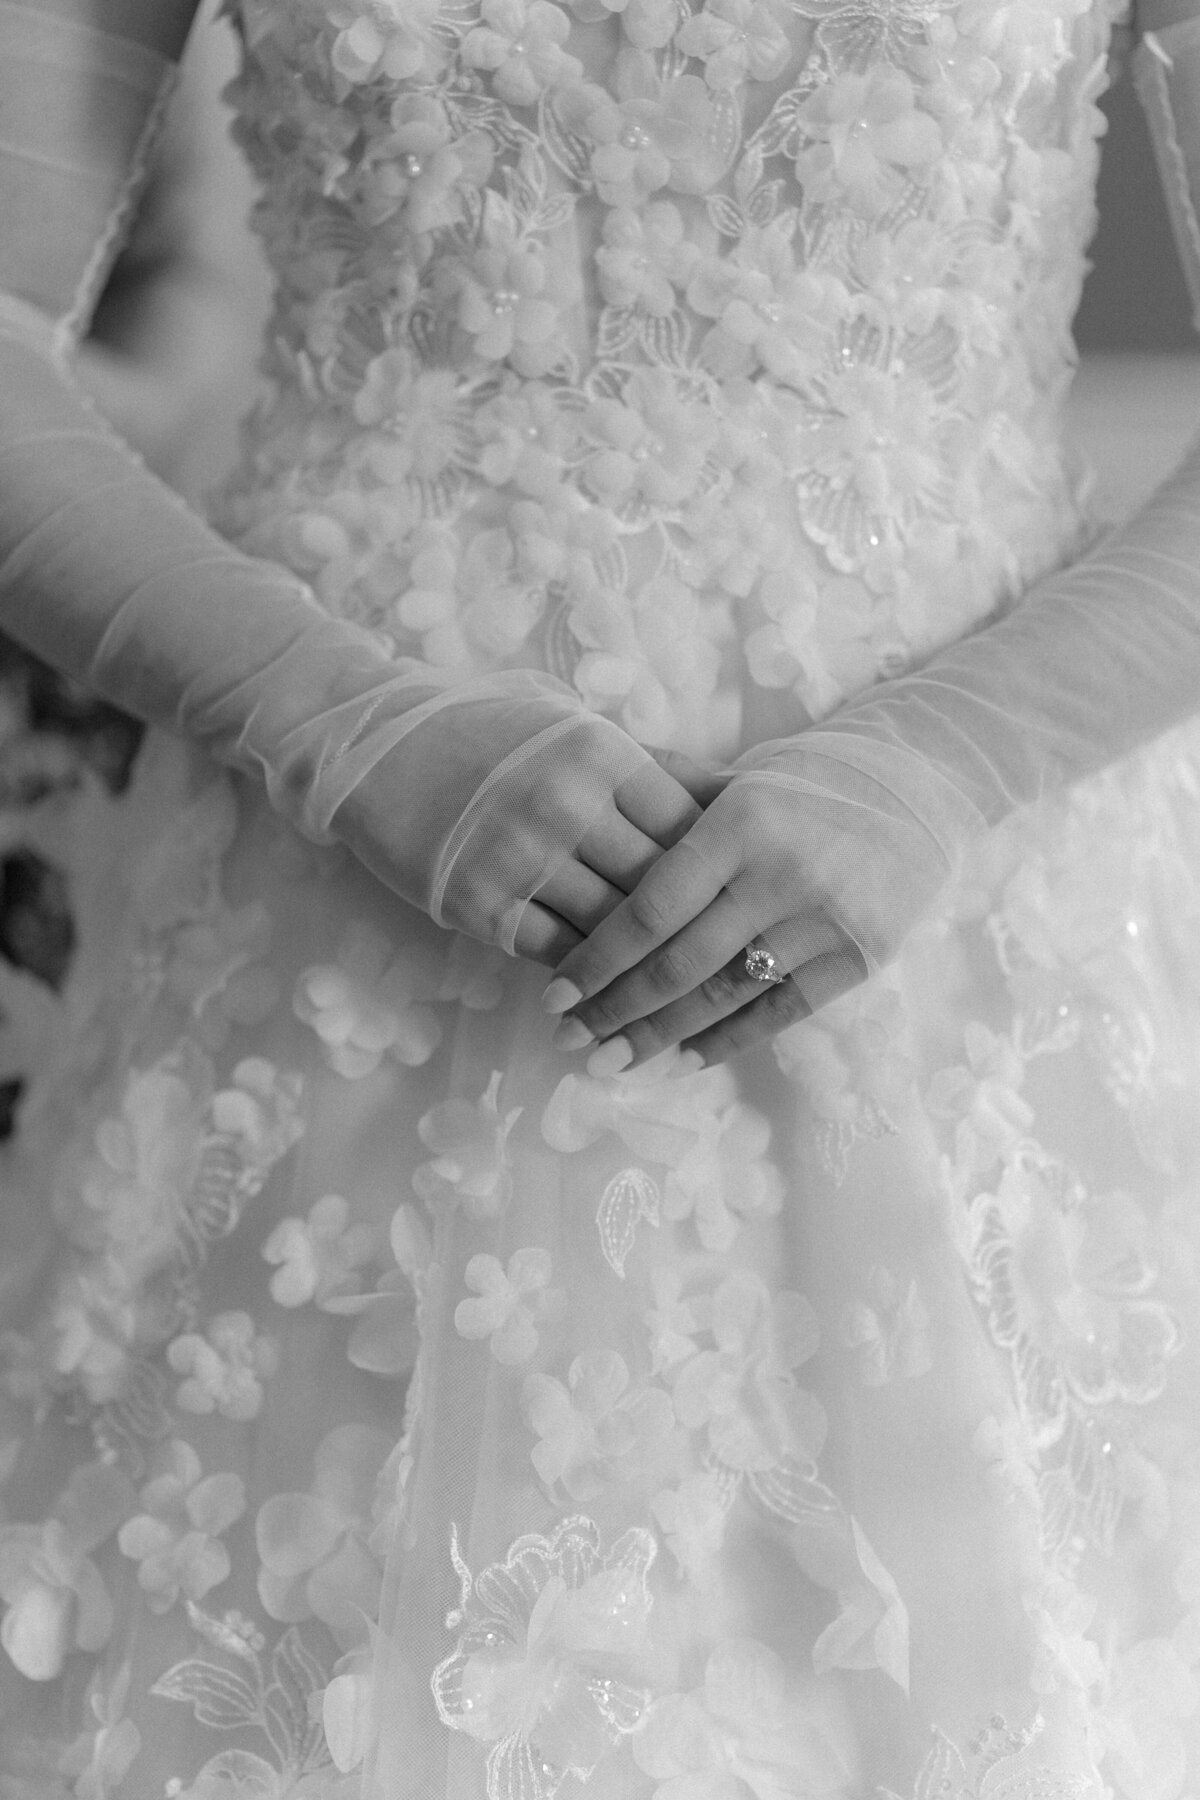 blackandwhite_detail_engagement_ring_wedding_dress_texture_elegant_hands_bride_wedding_kailee_dimeglio_photography-191